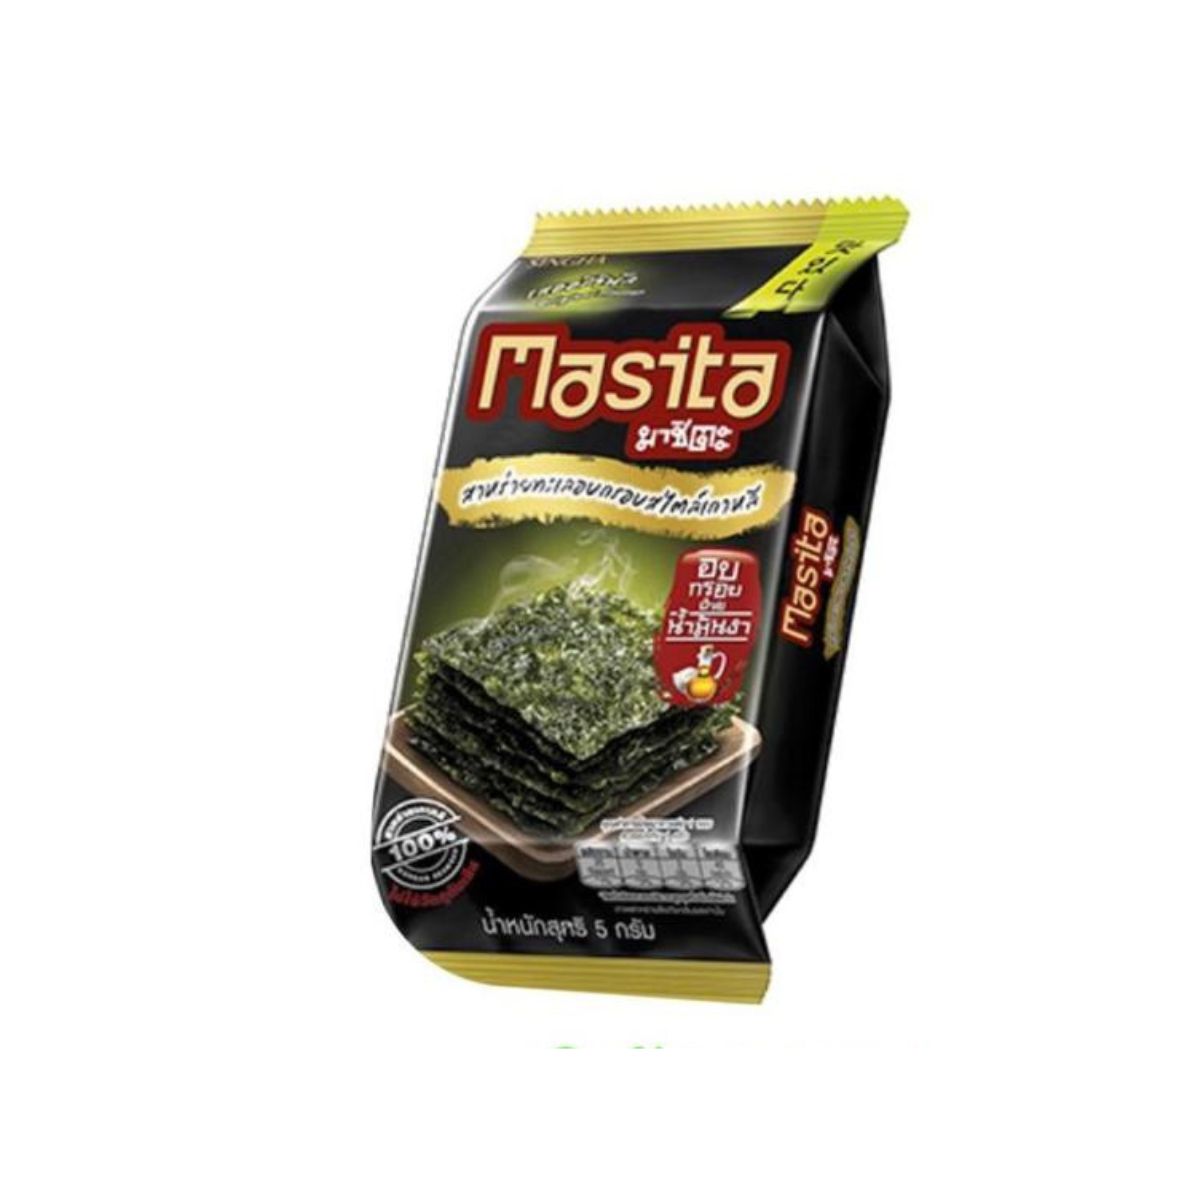 Masita - Korean Style Roasted Seaweed - Original Flavour - 5g